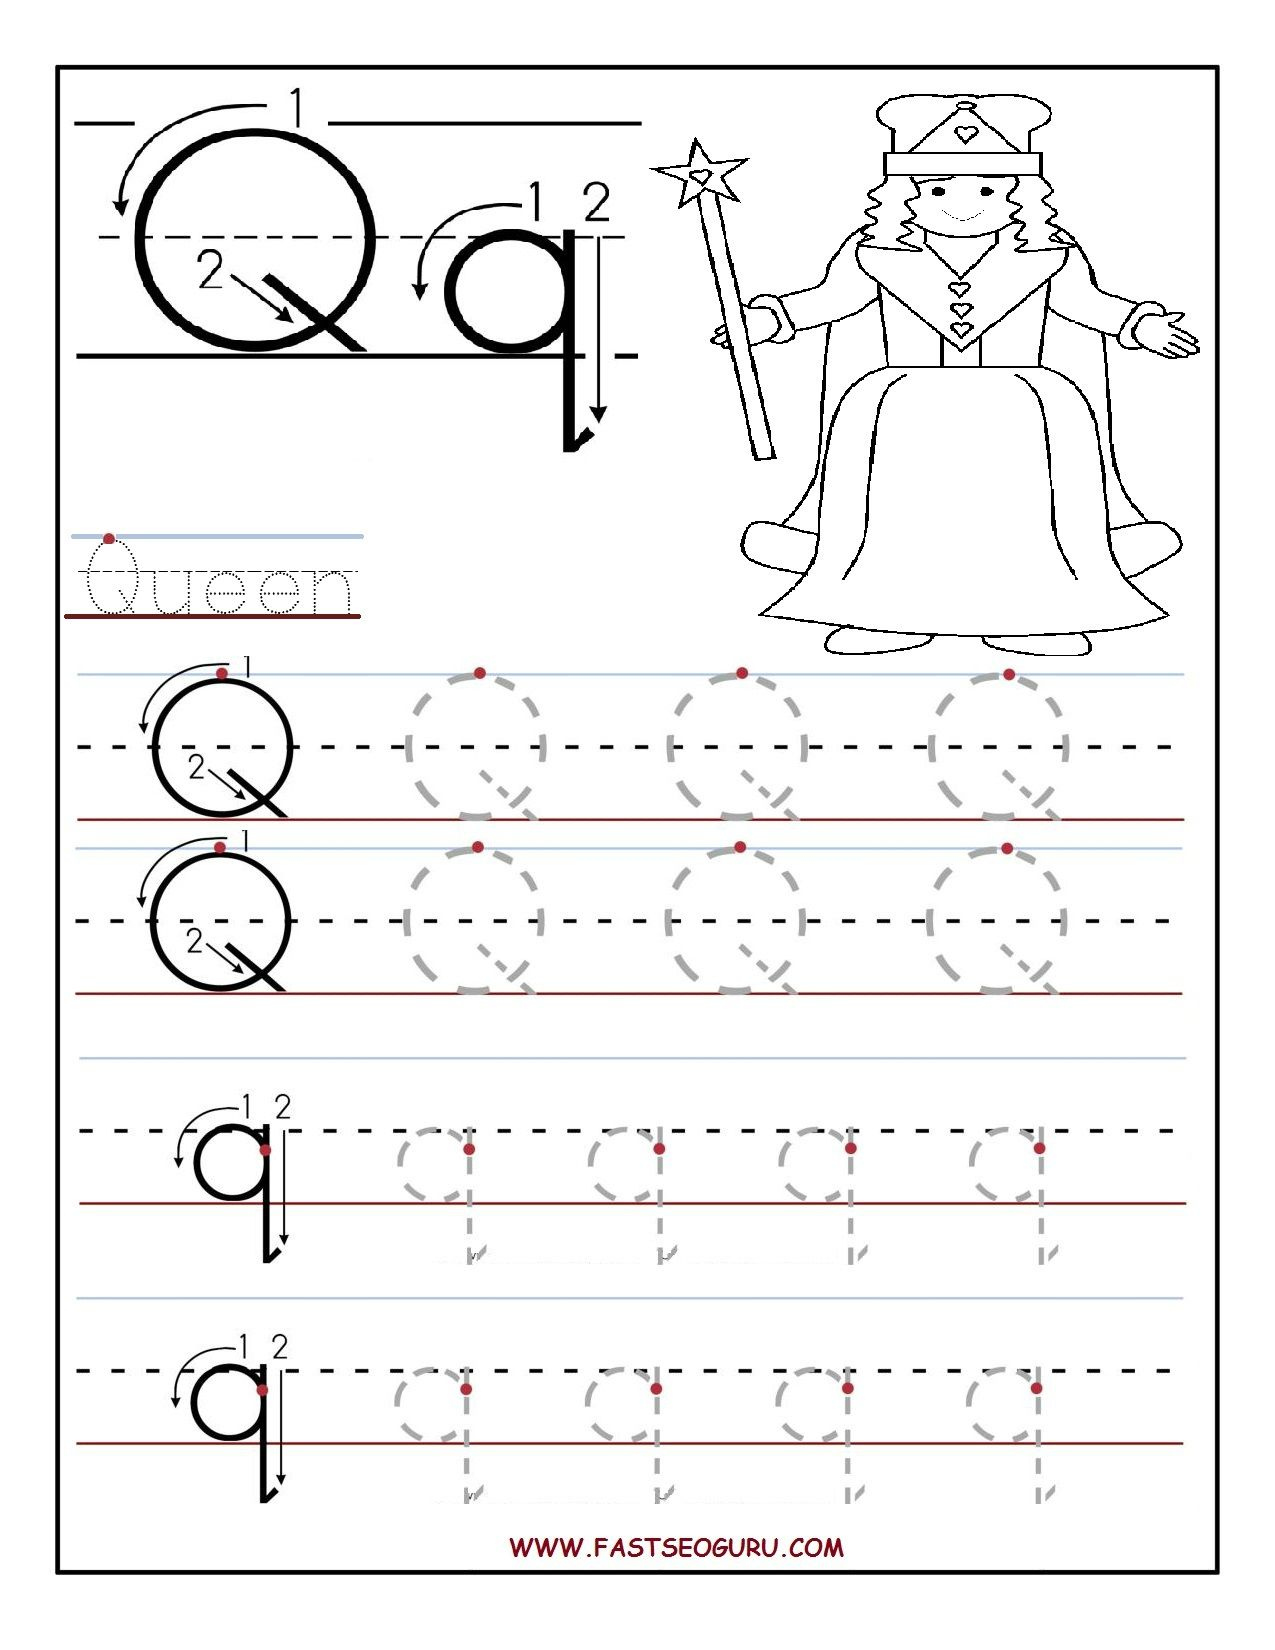 Printable Letter Q Tracing Worksheets For Preschool jpg 1 275 1 650 